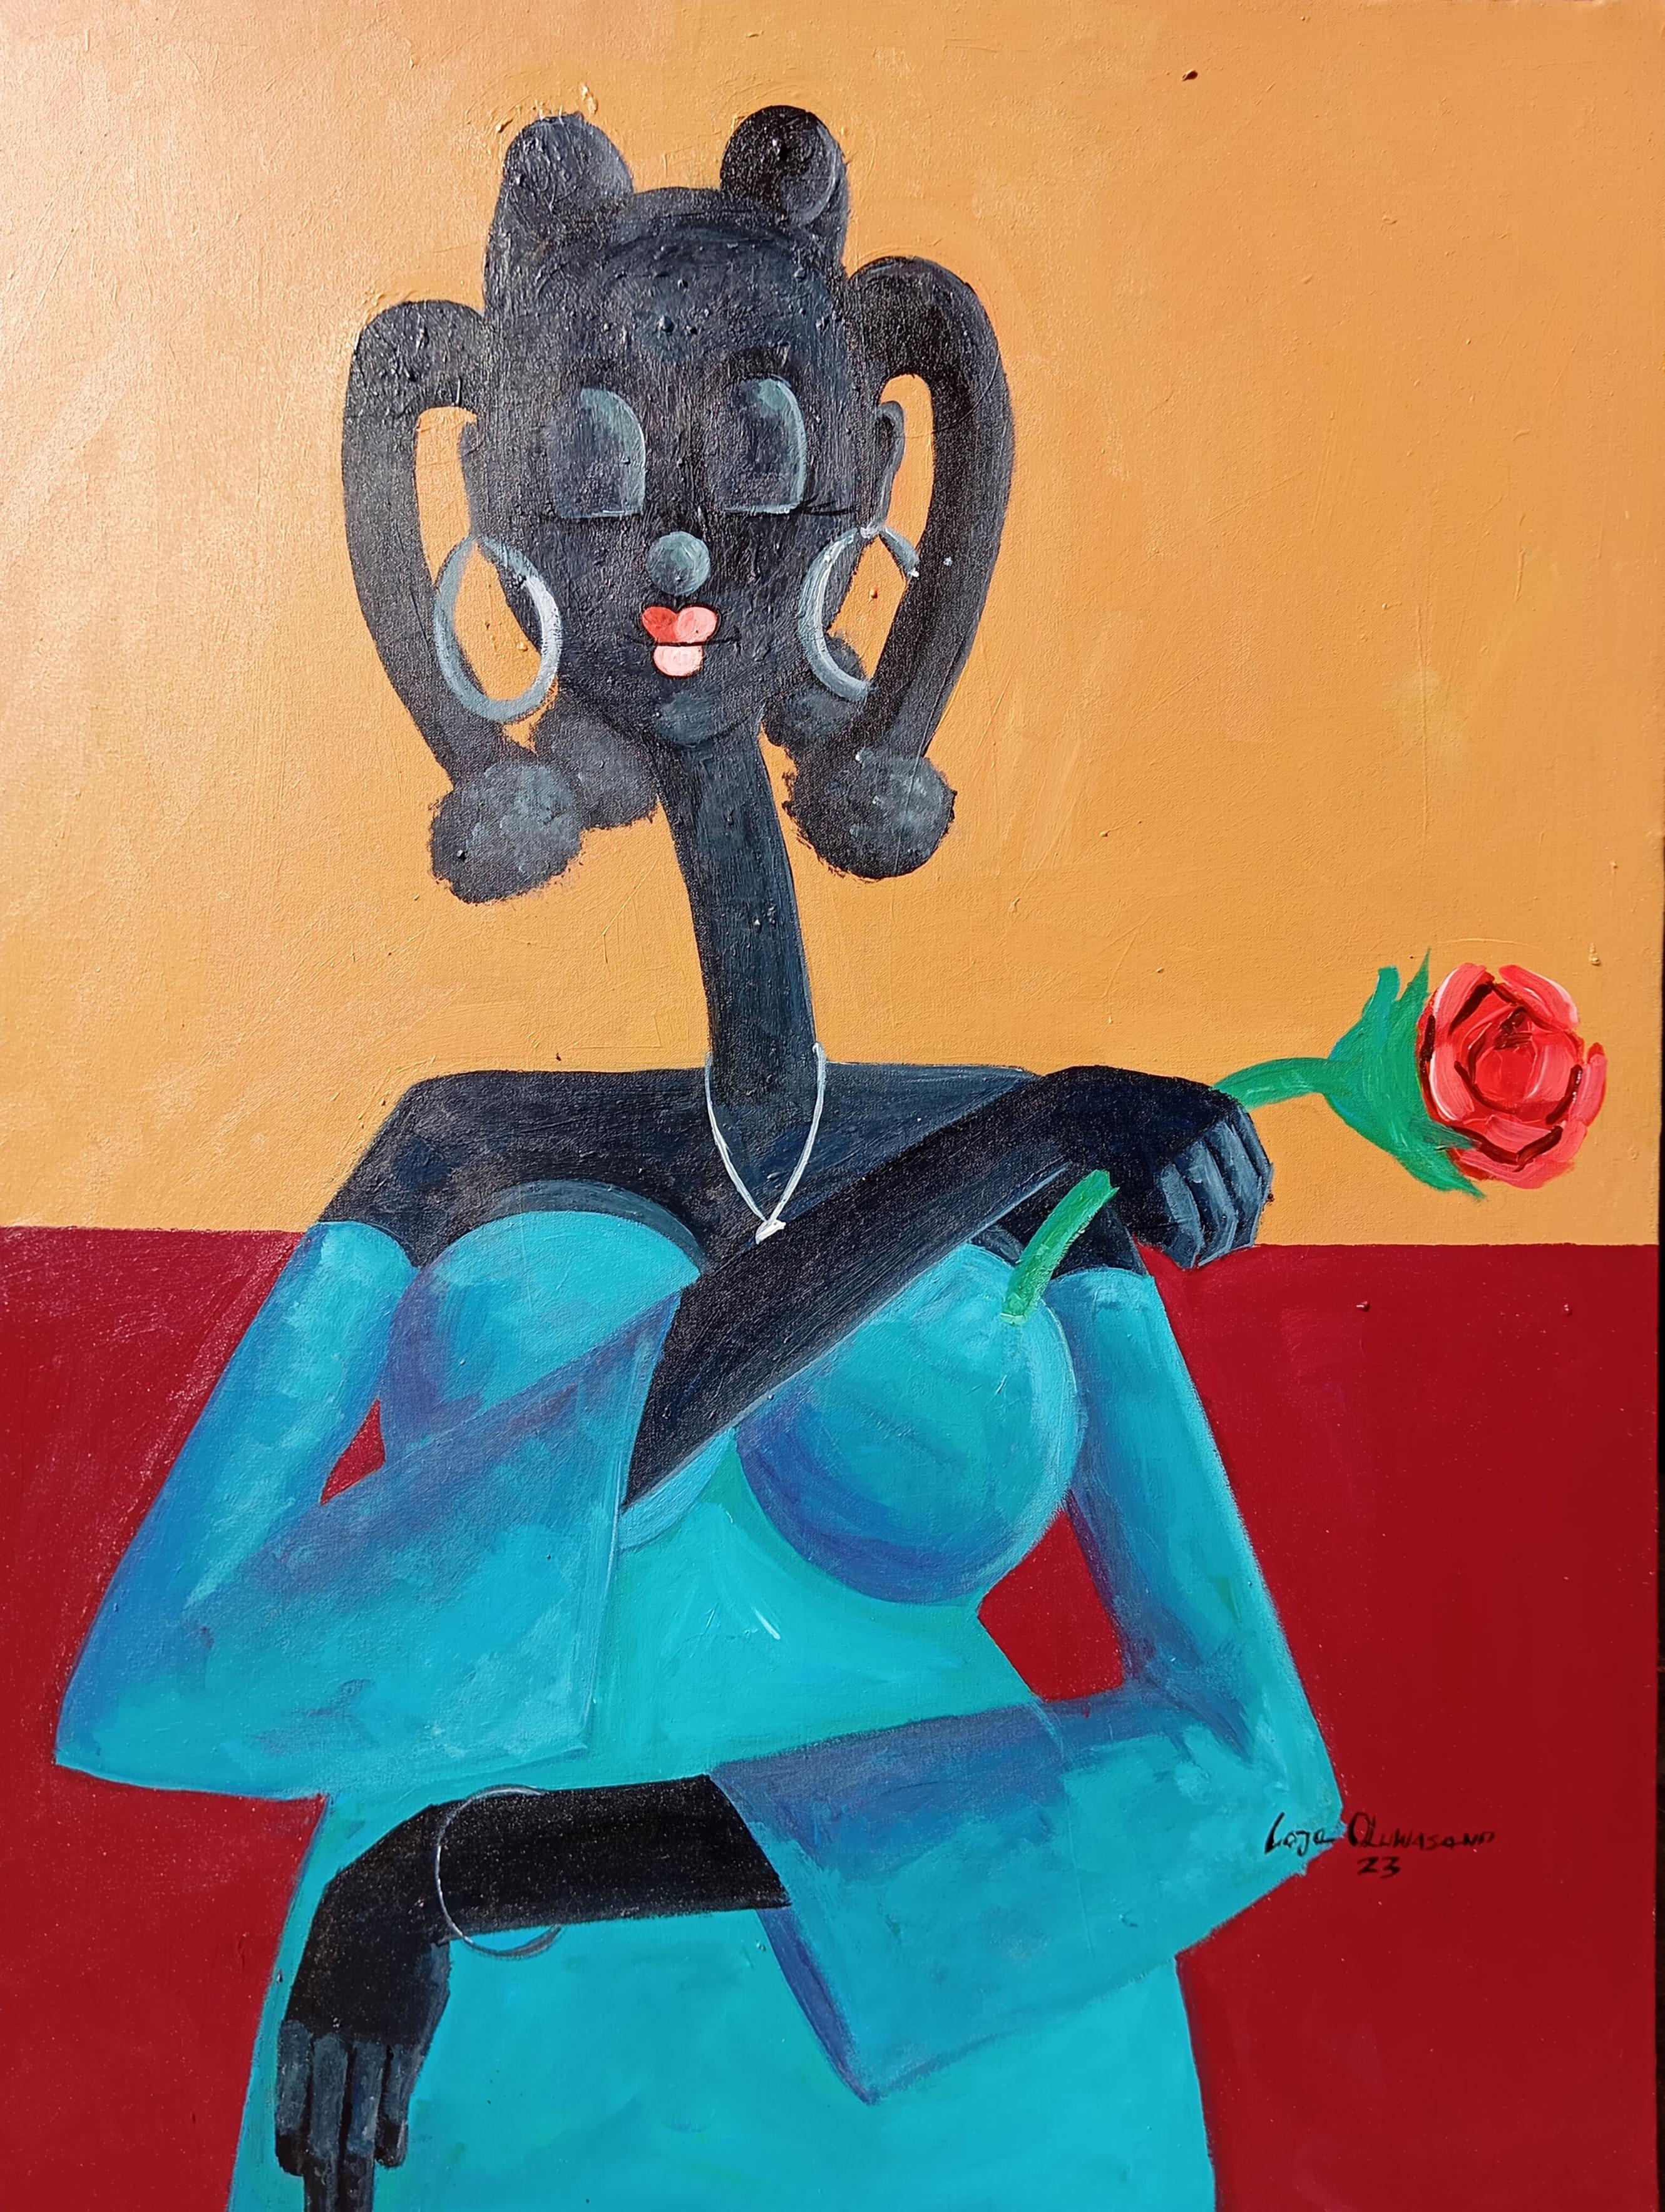 Loje Oluwaseun  Portrait Painting - Self Appreciation